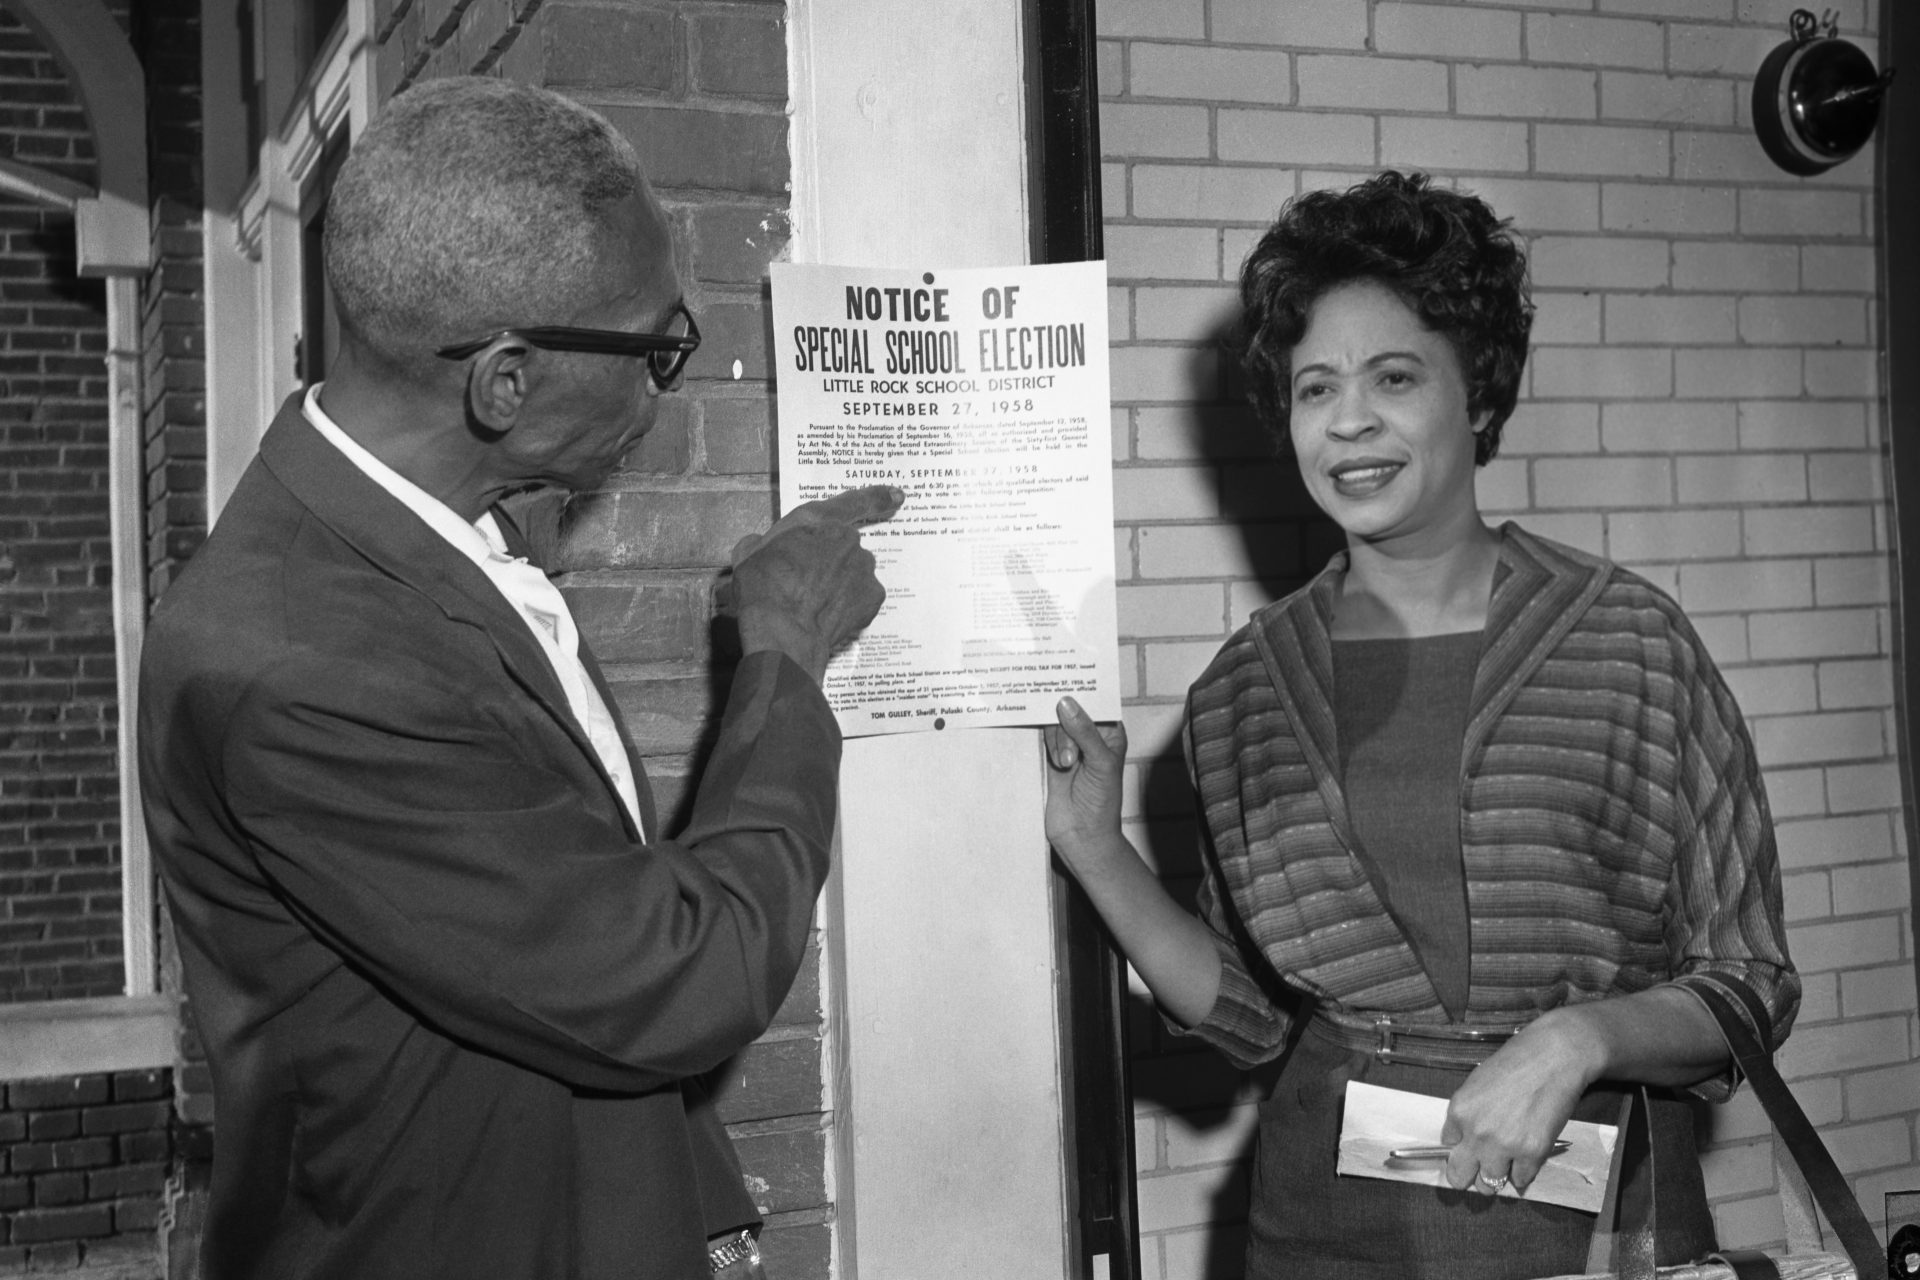 1958 - Civil rights